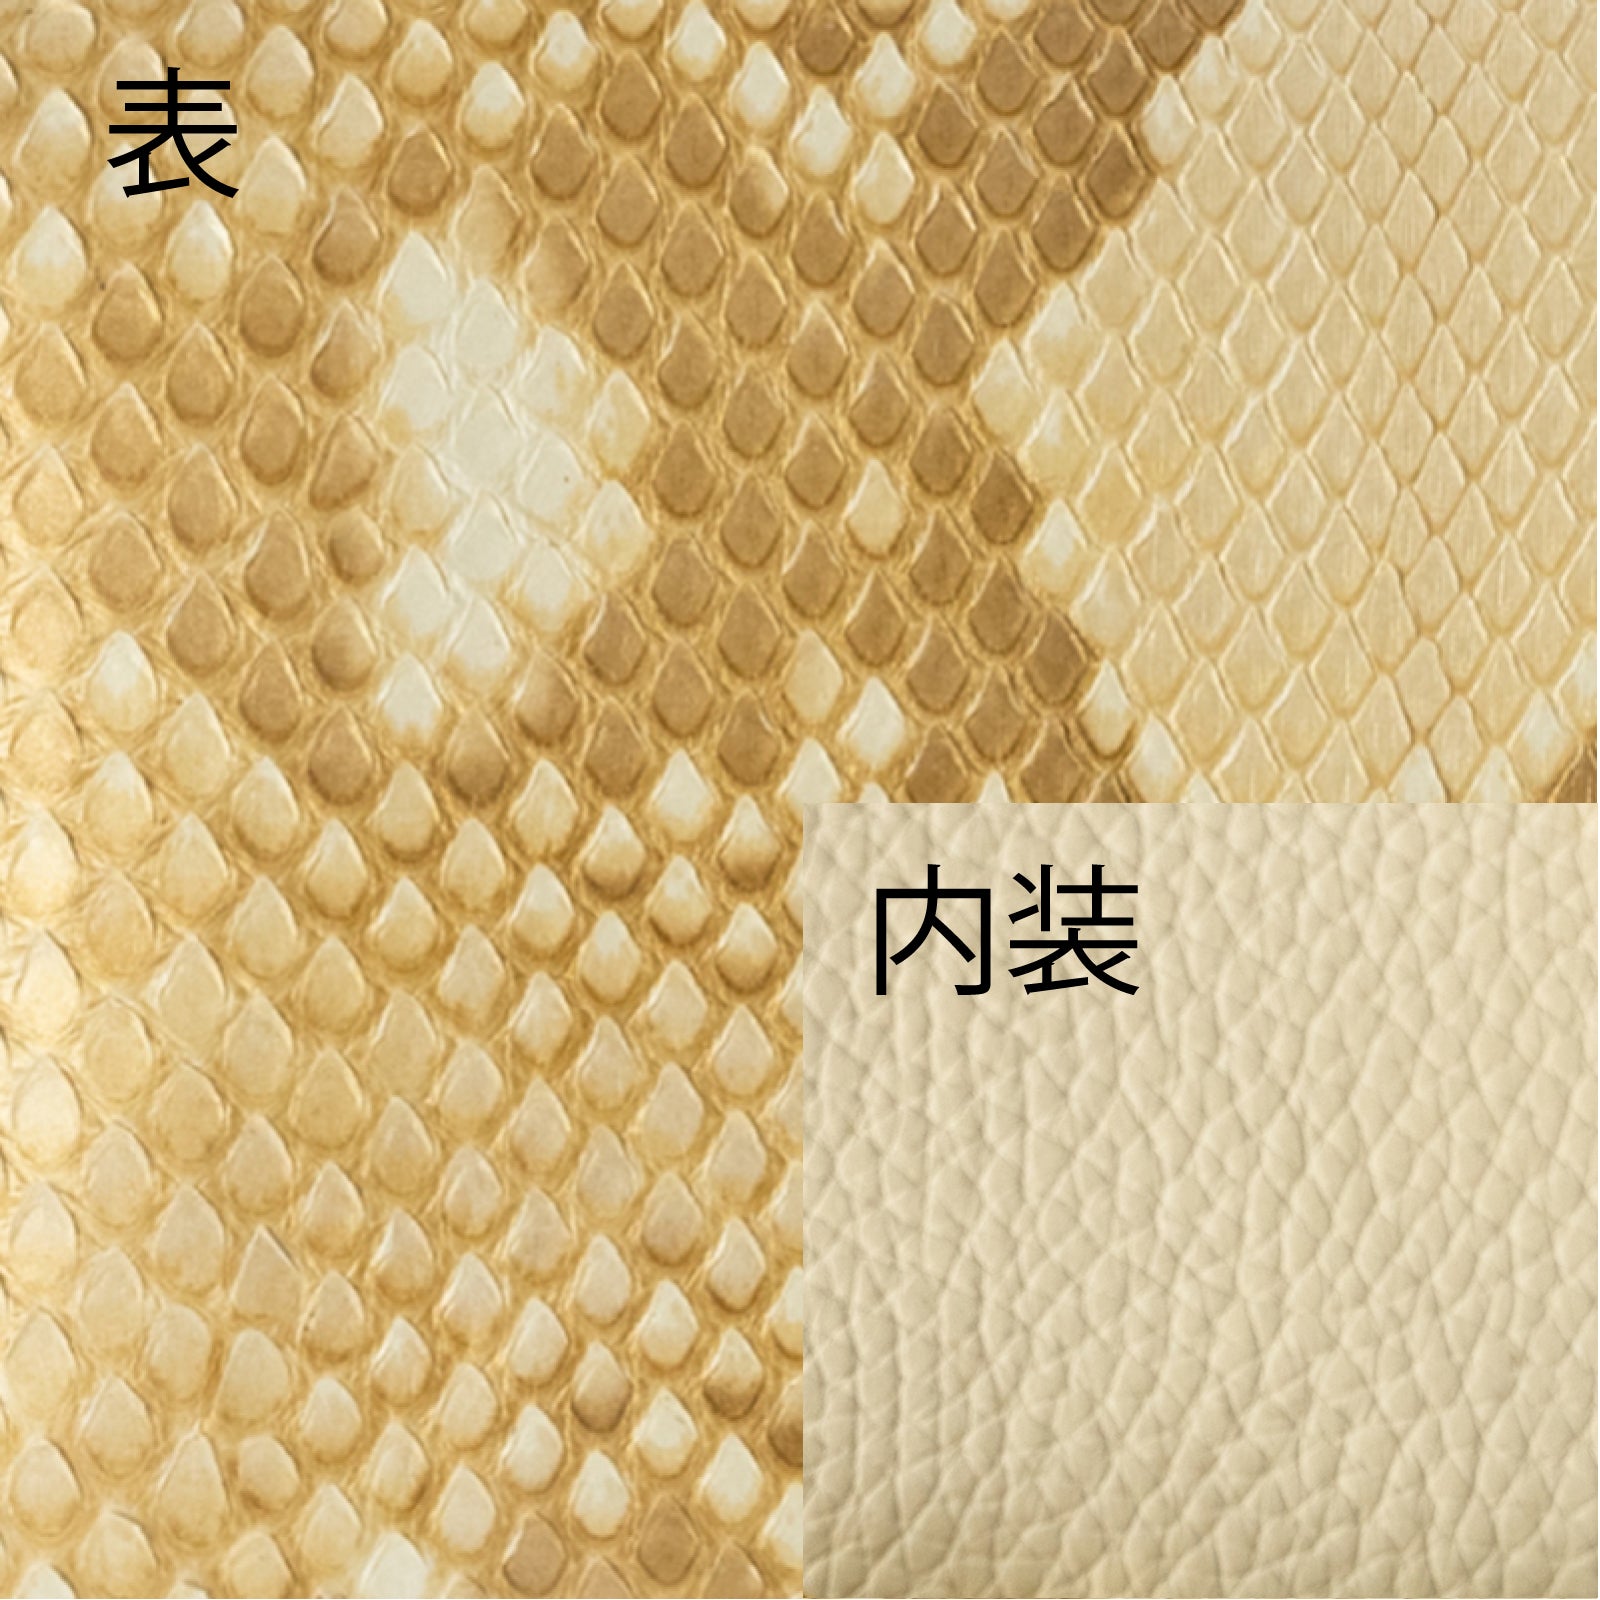 Bi-fold wallet ecle python leather 